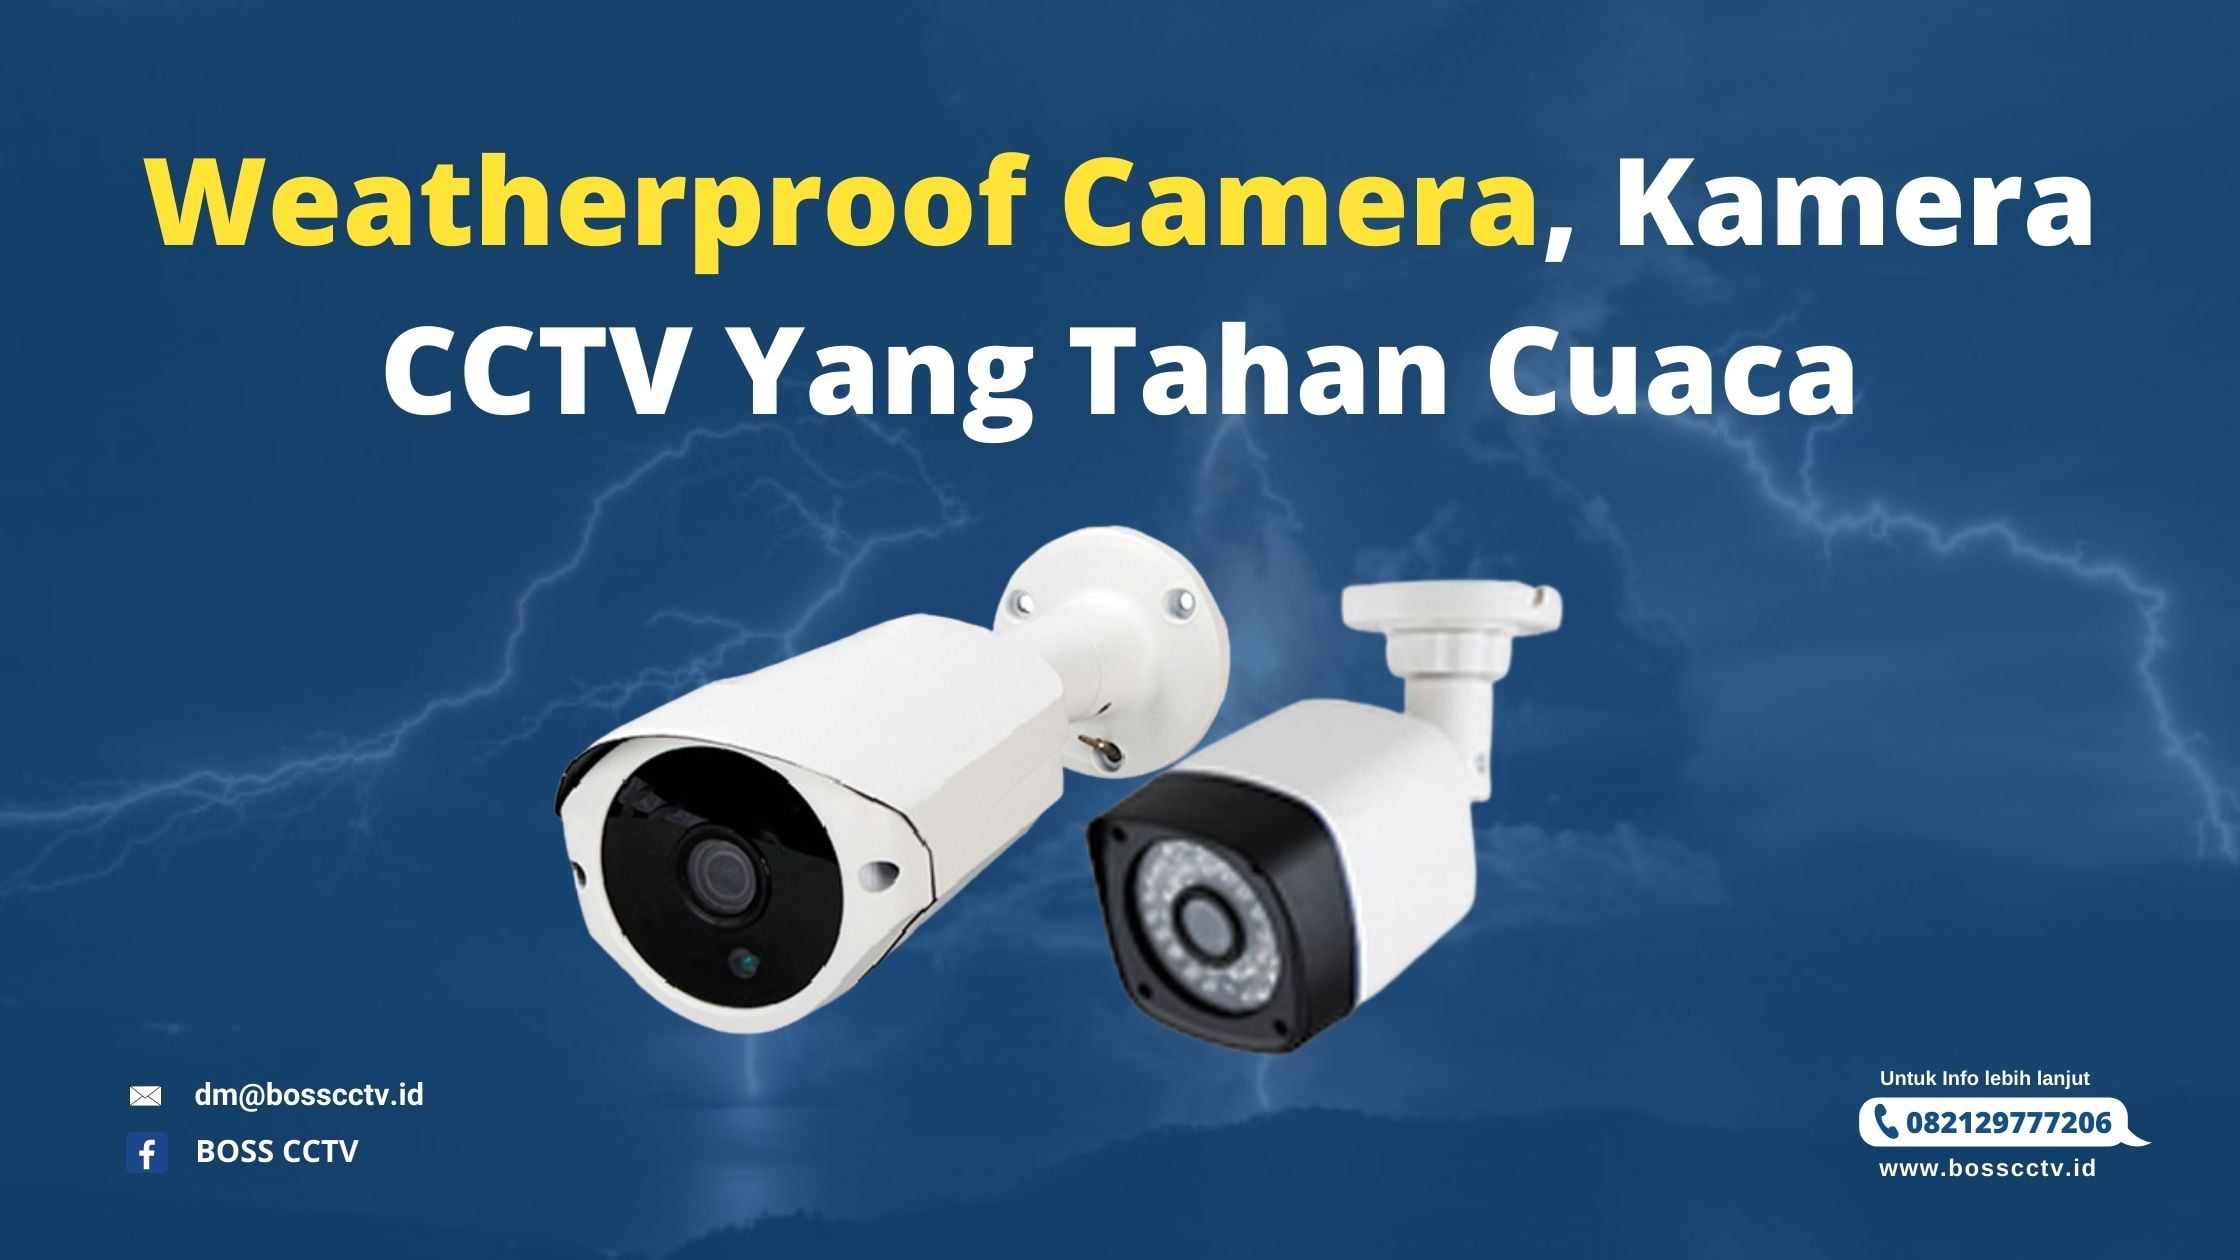 Weatherproof Camera, Kamera CCTV Yang Tahan Cuaca